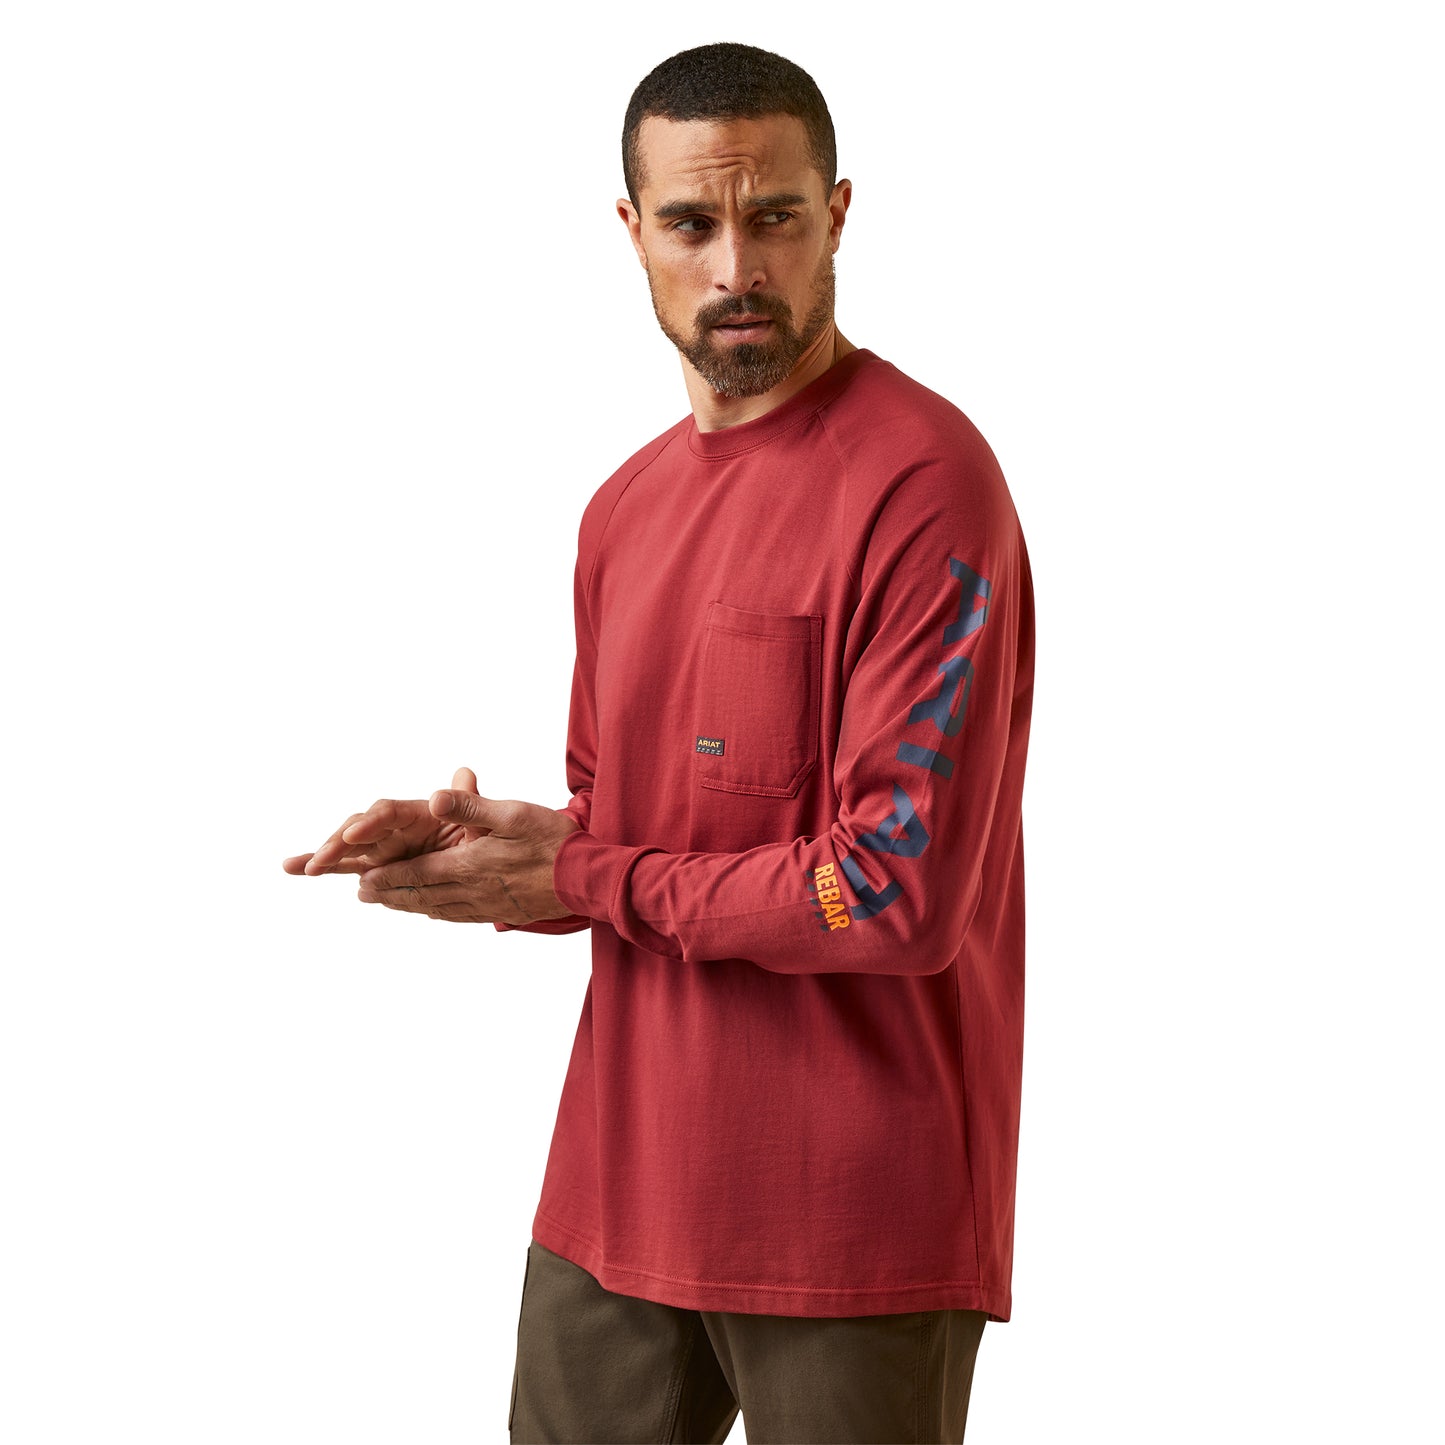 Ariat Men's Rebar Cotton Strong Graphic Brick Red T-Shirt 10046616